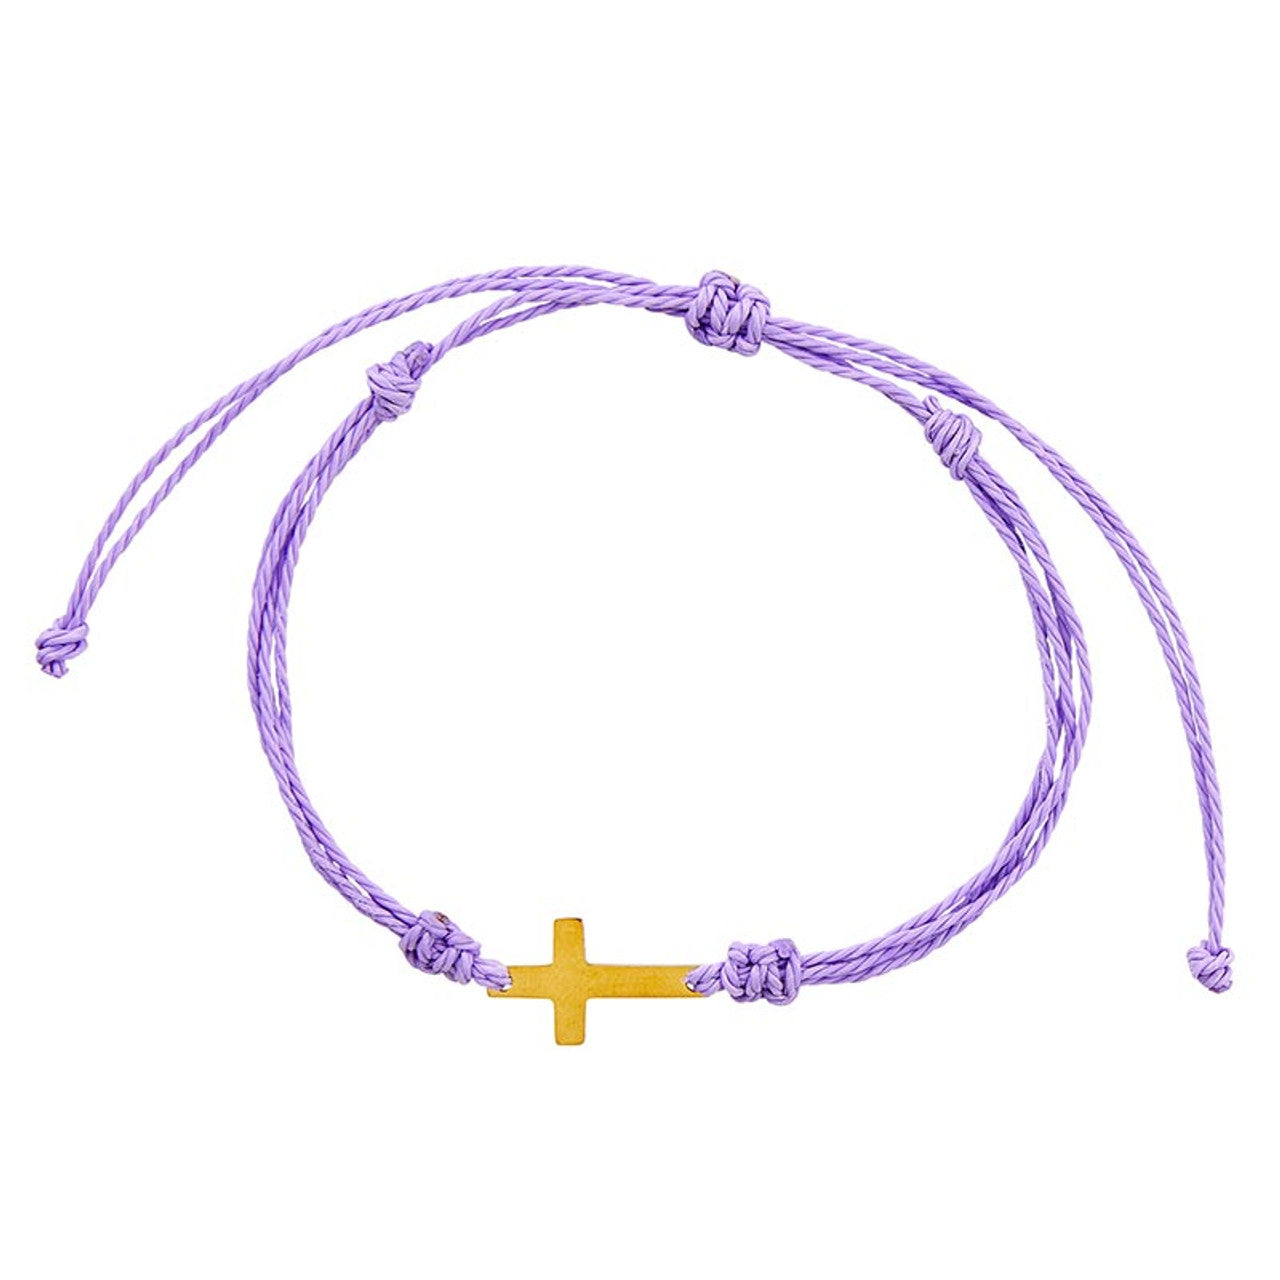 Lavendar Cross Macrame Bracelet - The Christian Gift Company